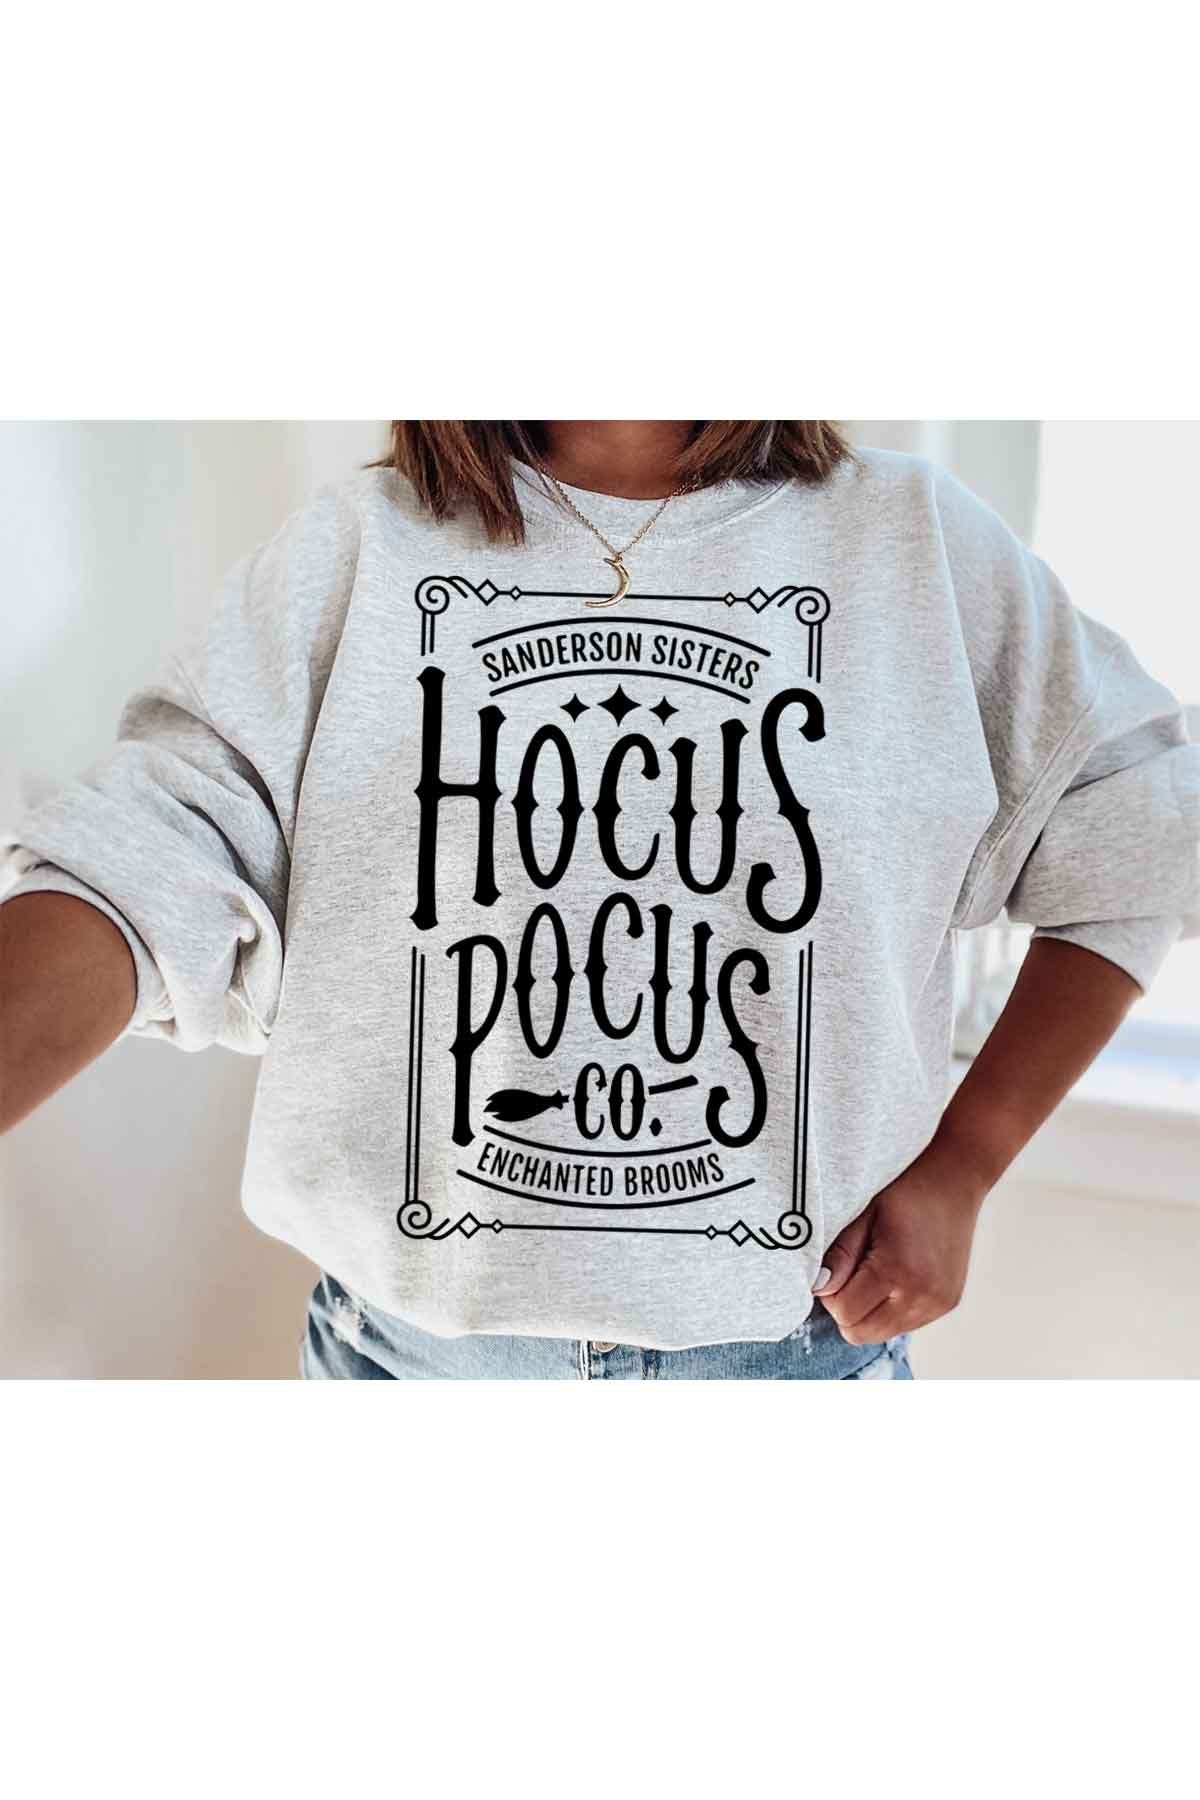 Hocus Pocus Graphic Sweatshirt- Heather Grey